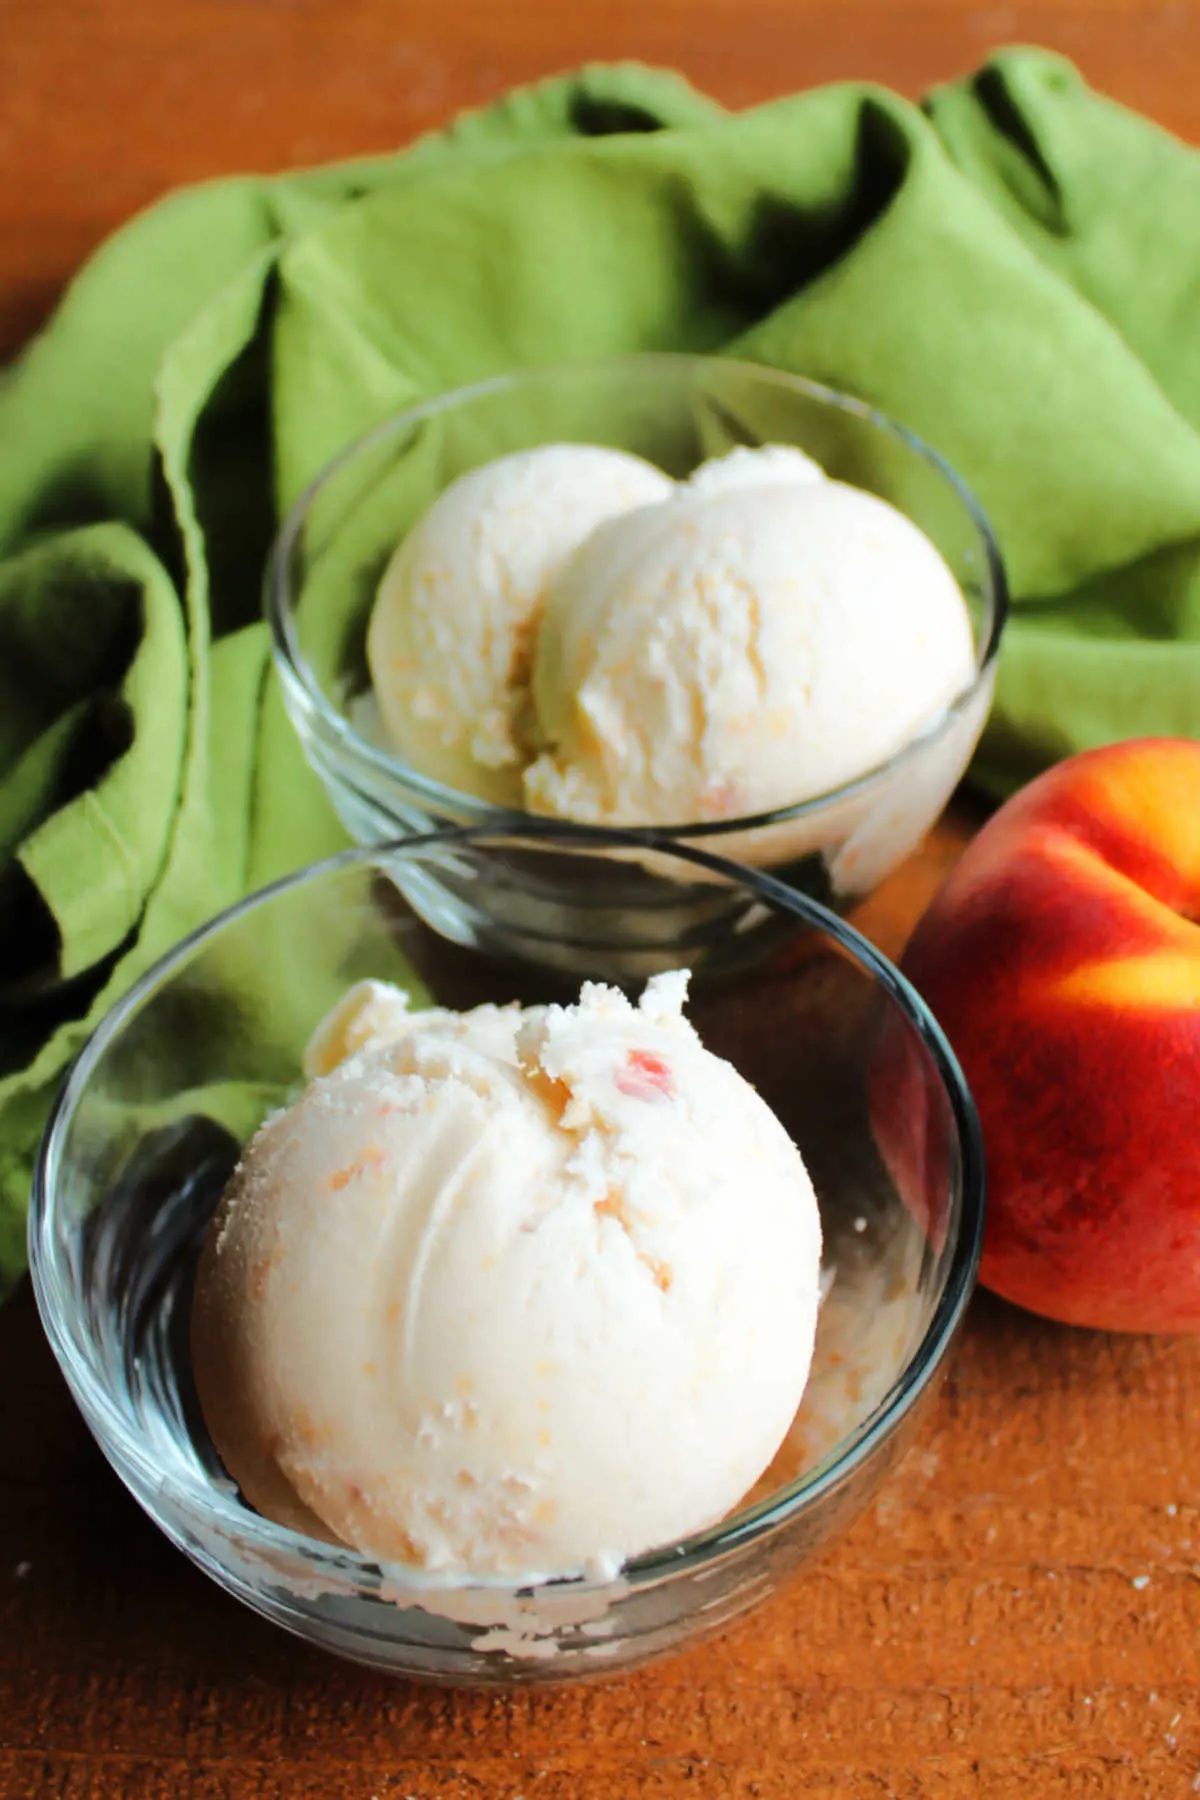 Scoops of peach ice cream next to fresh peach.